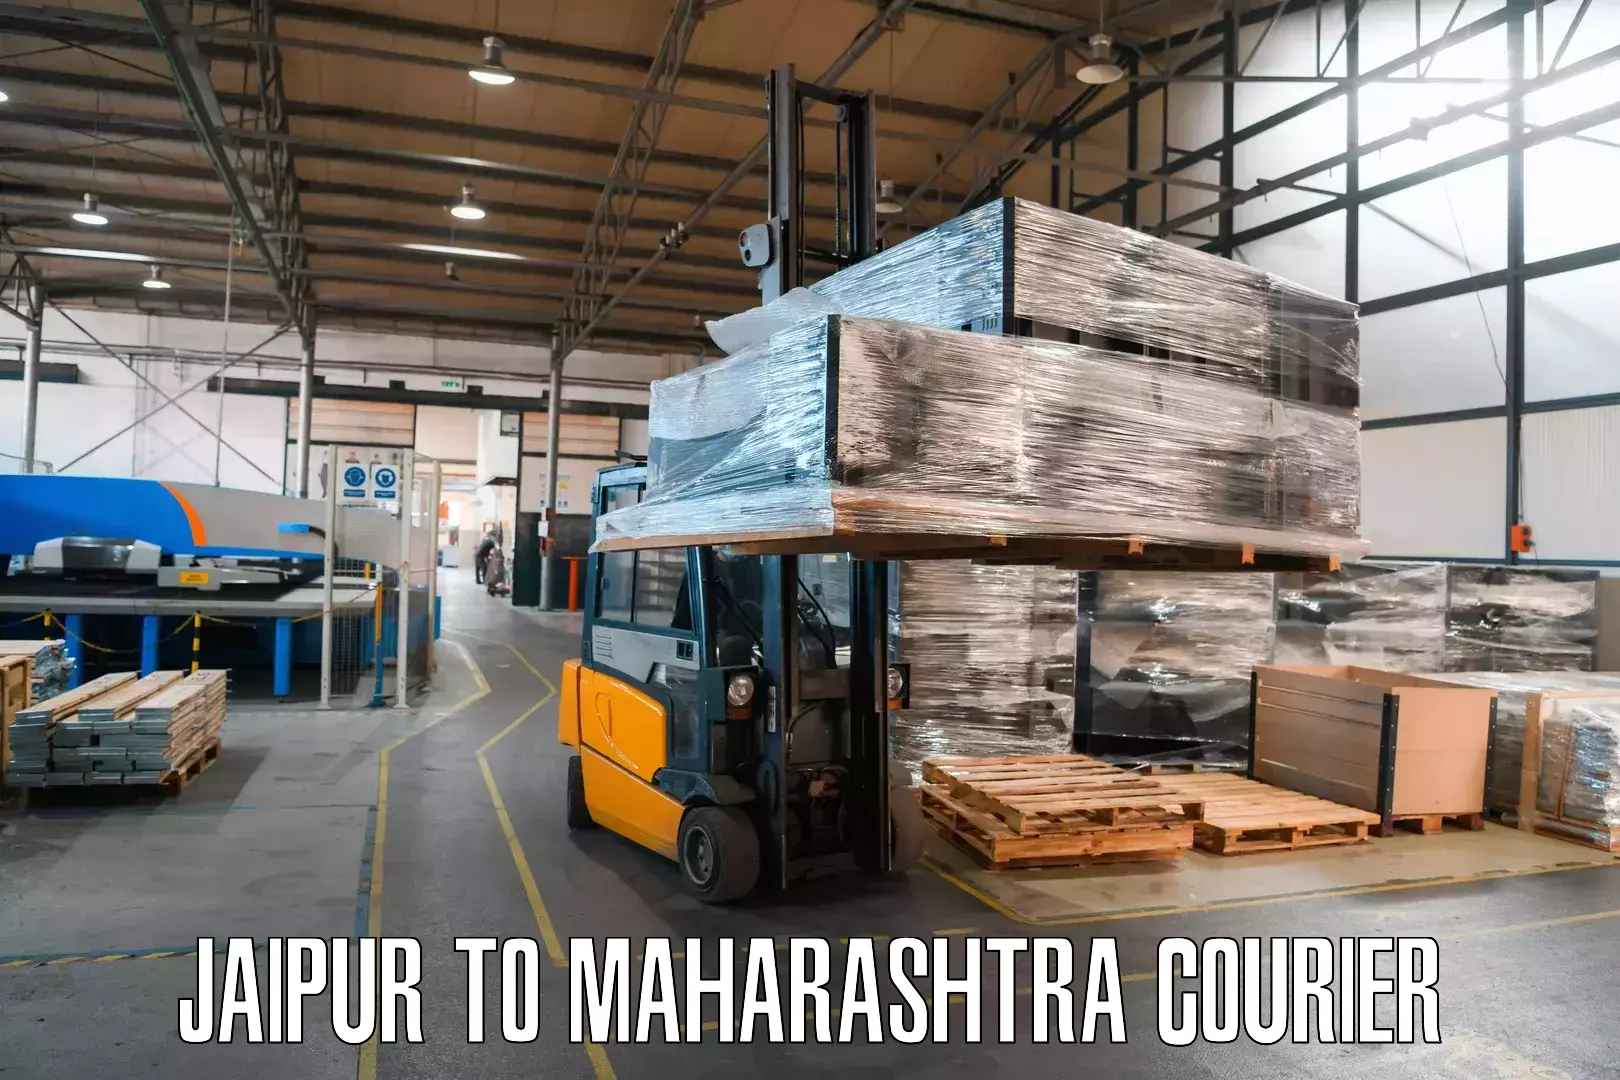 Courier service innovation Jaipur to Kalyan Dombivli